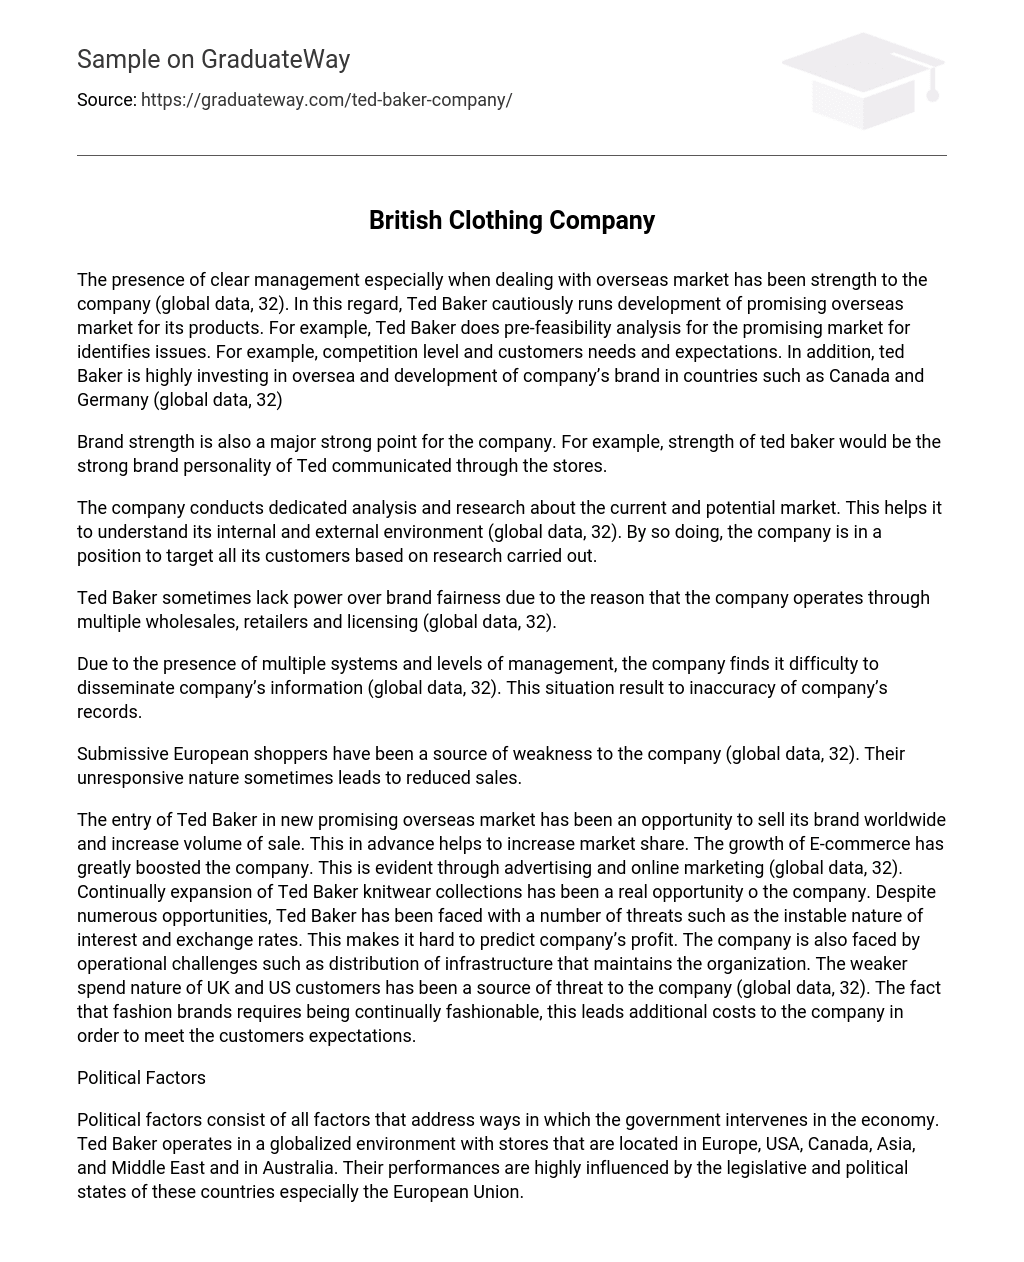 British Clothing Company Analysis